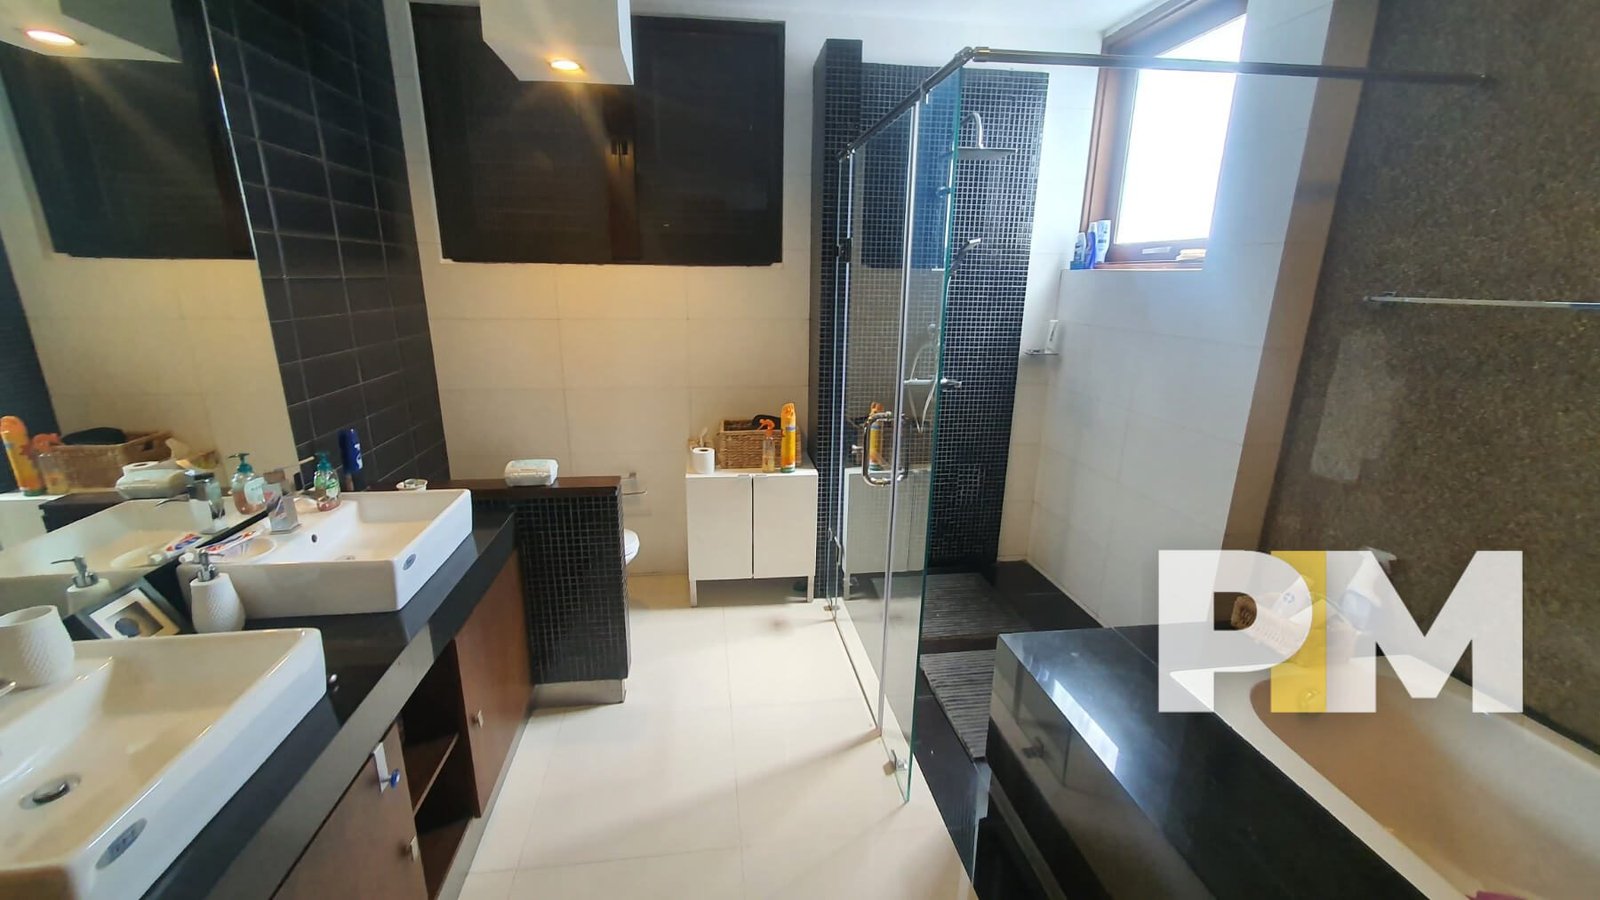 Bathrooom with bathtub - Real Estate in Yangon